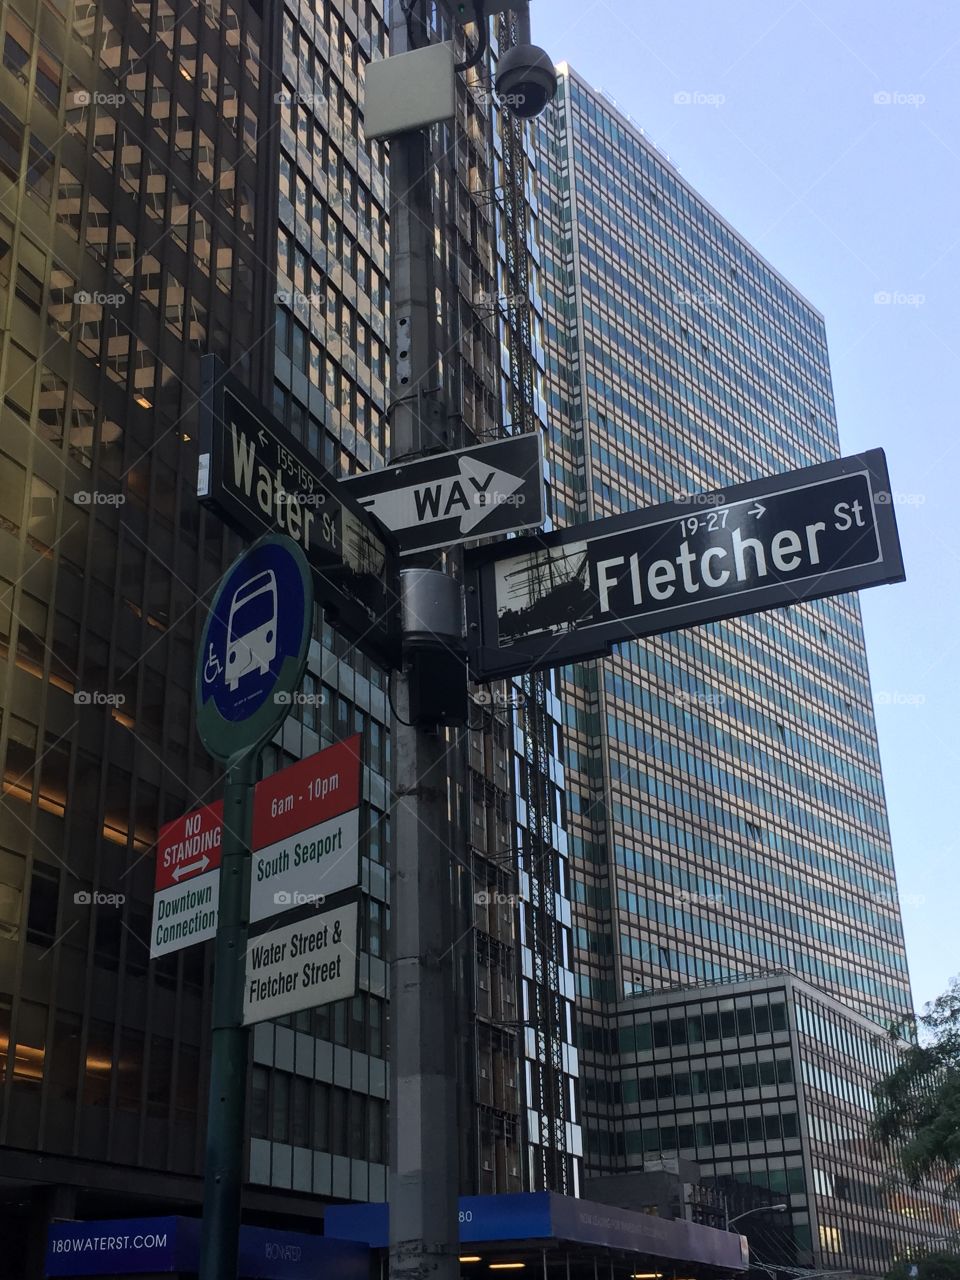 Street Signs
Fletcher & Water, Financial District, New York 